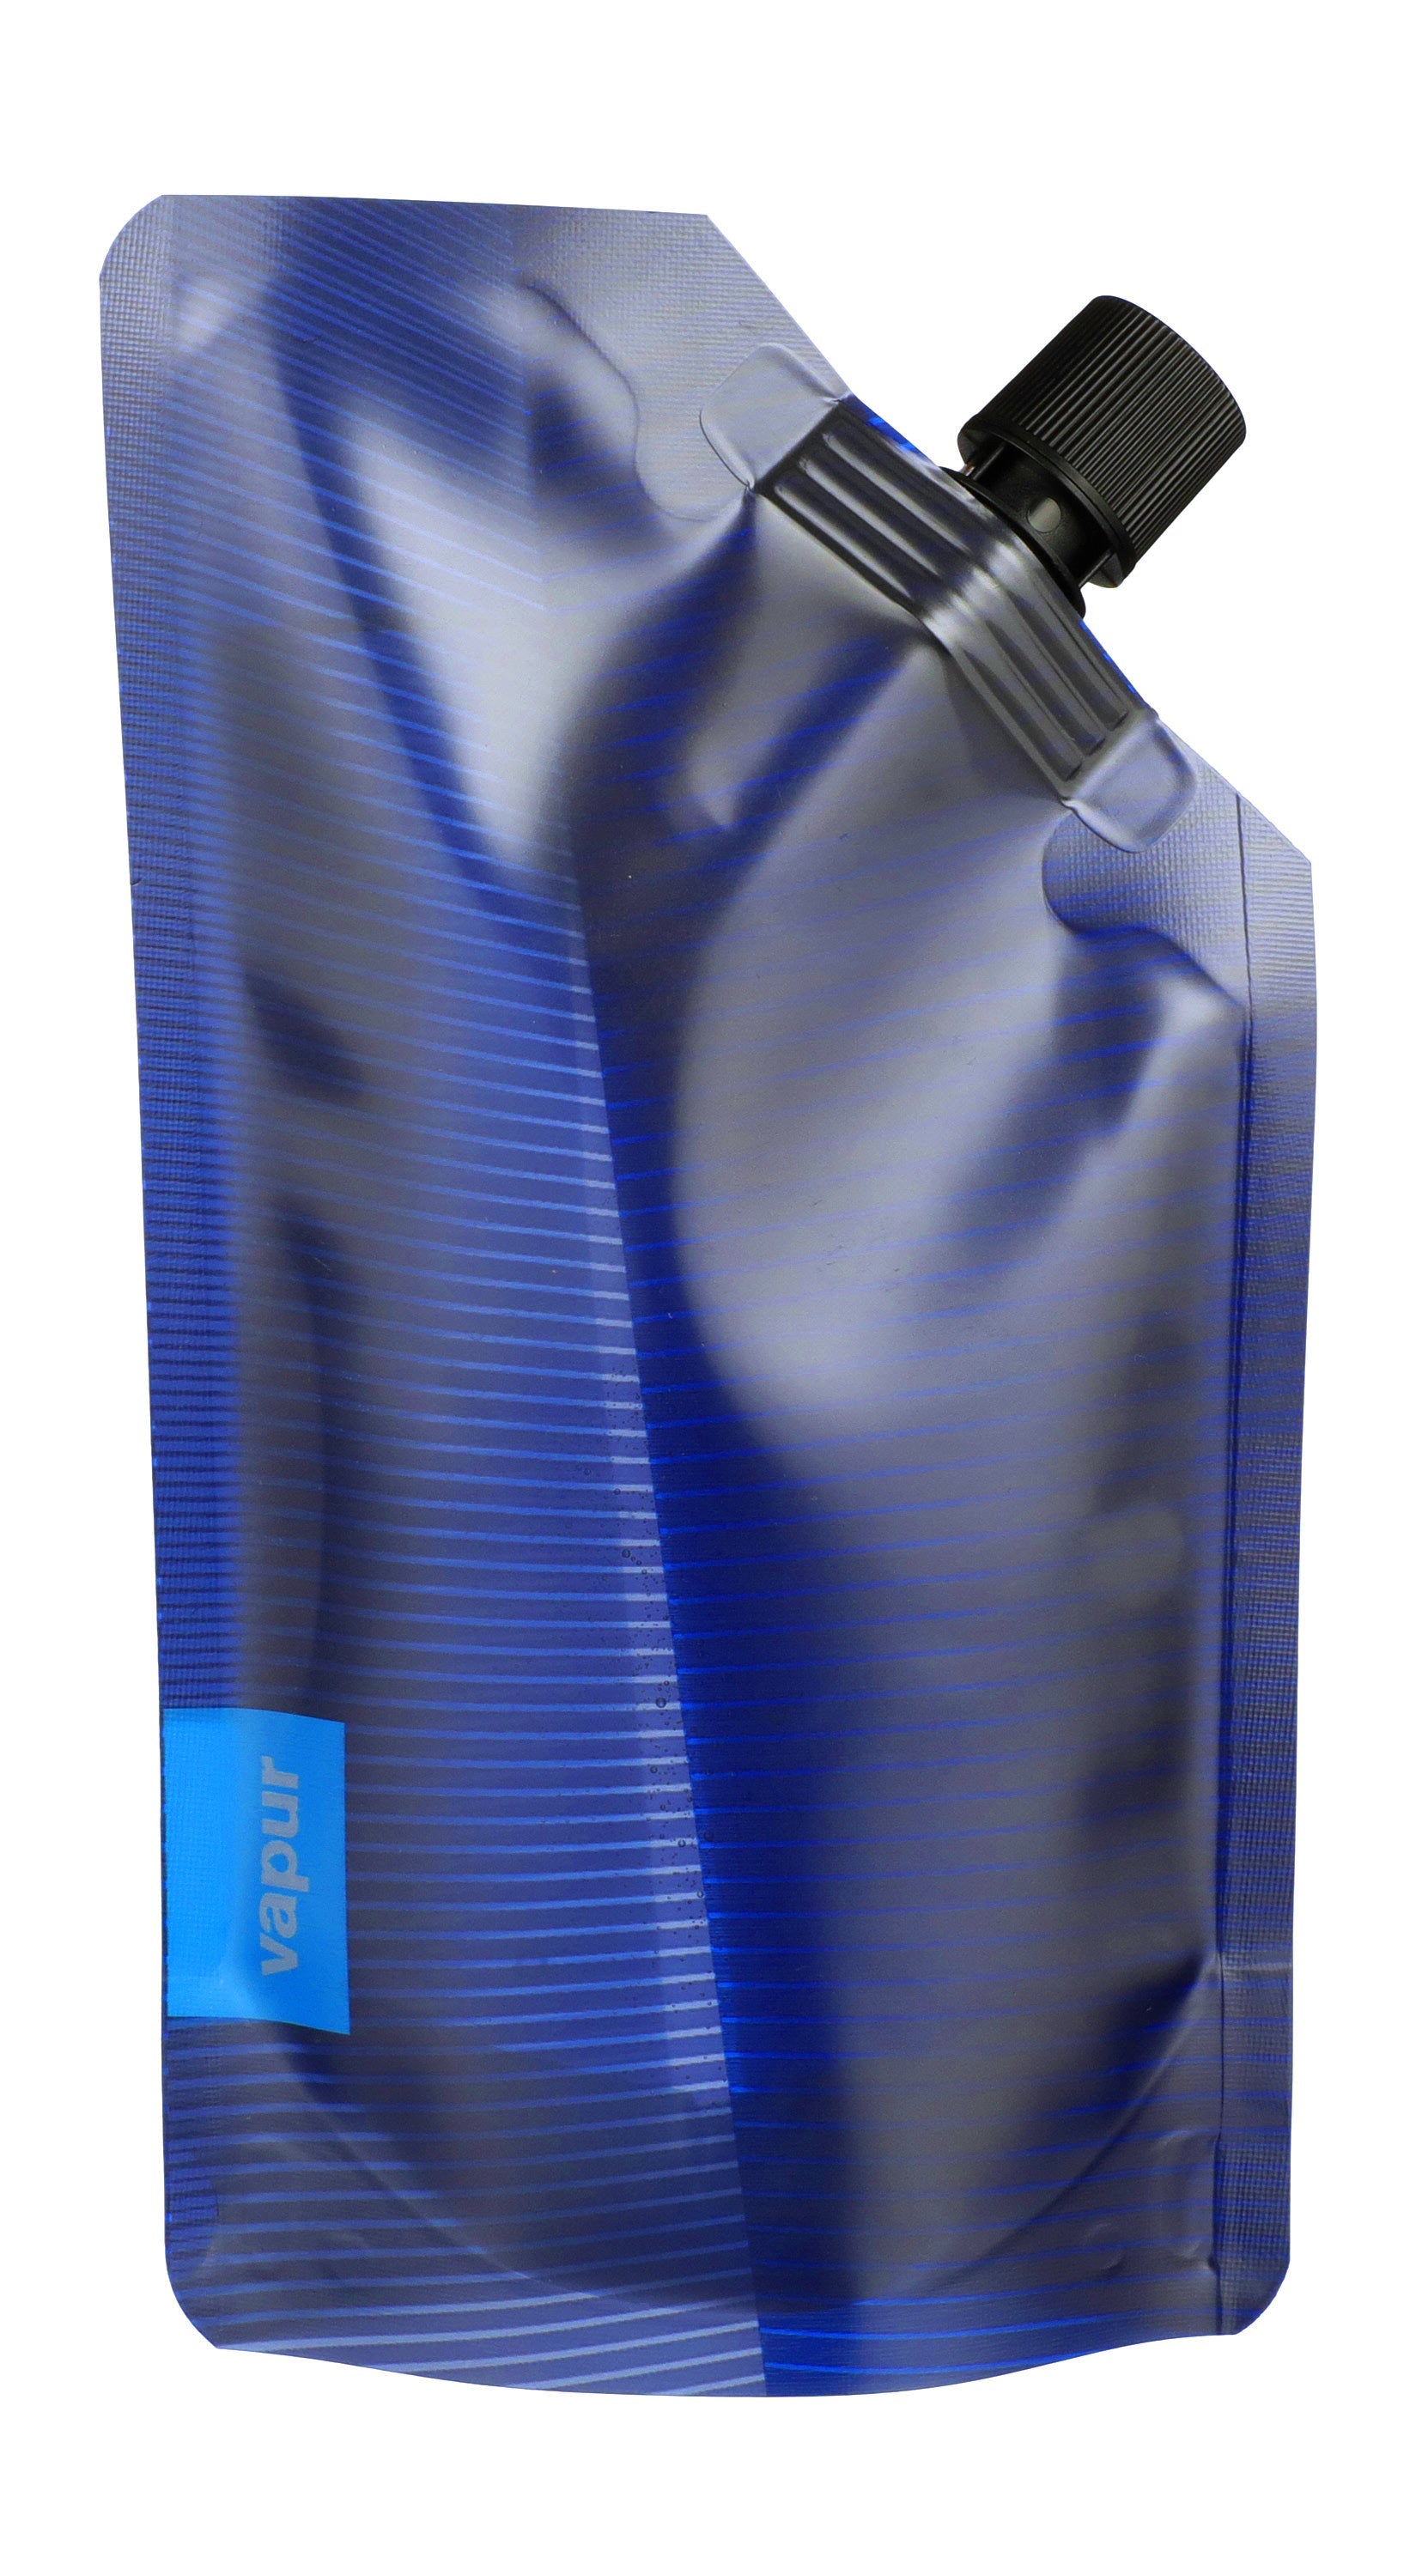 Vapur| Incognito Flask  - 300ML, Flasks, Vapur, Defiance Outdoor Gear Co.